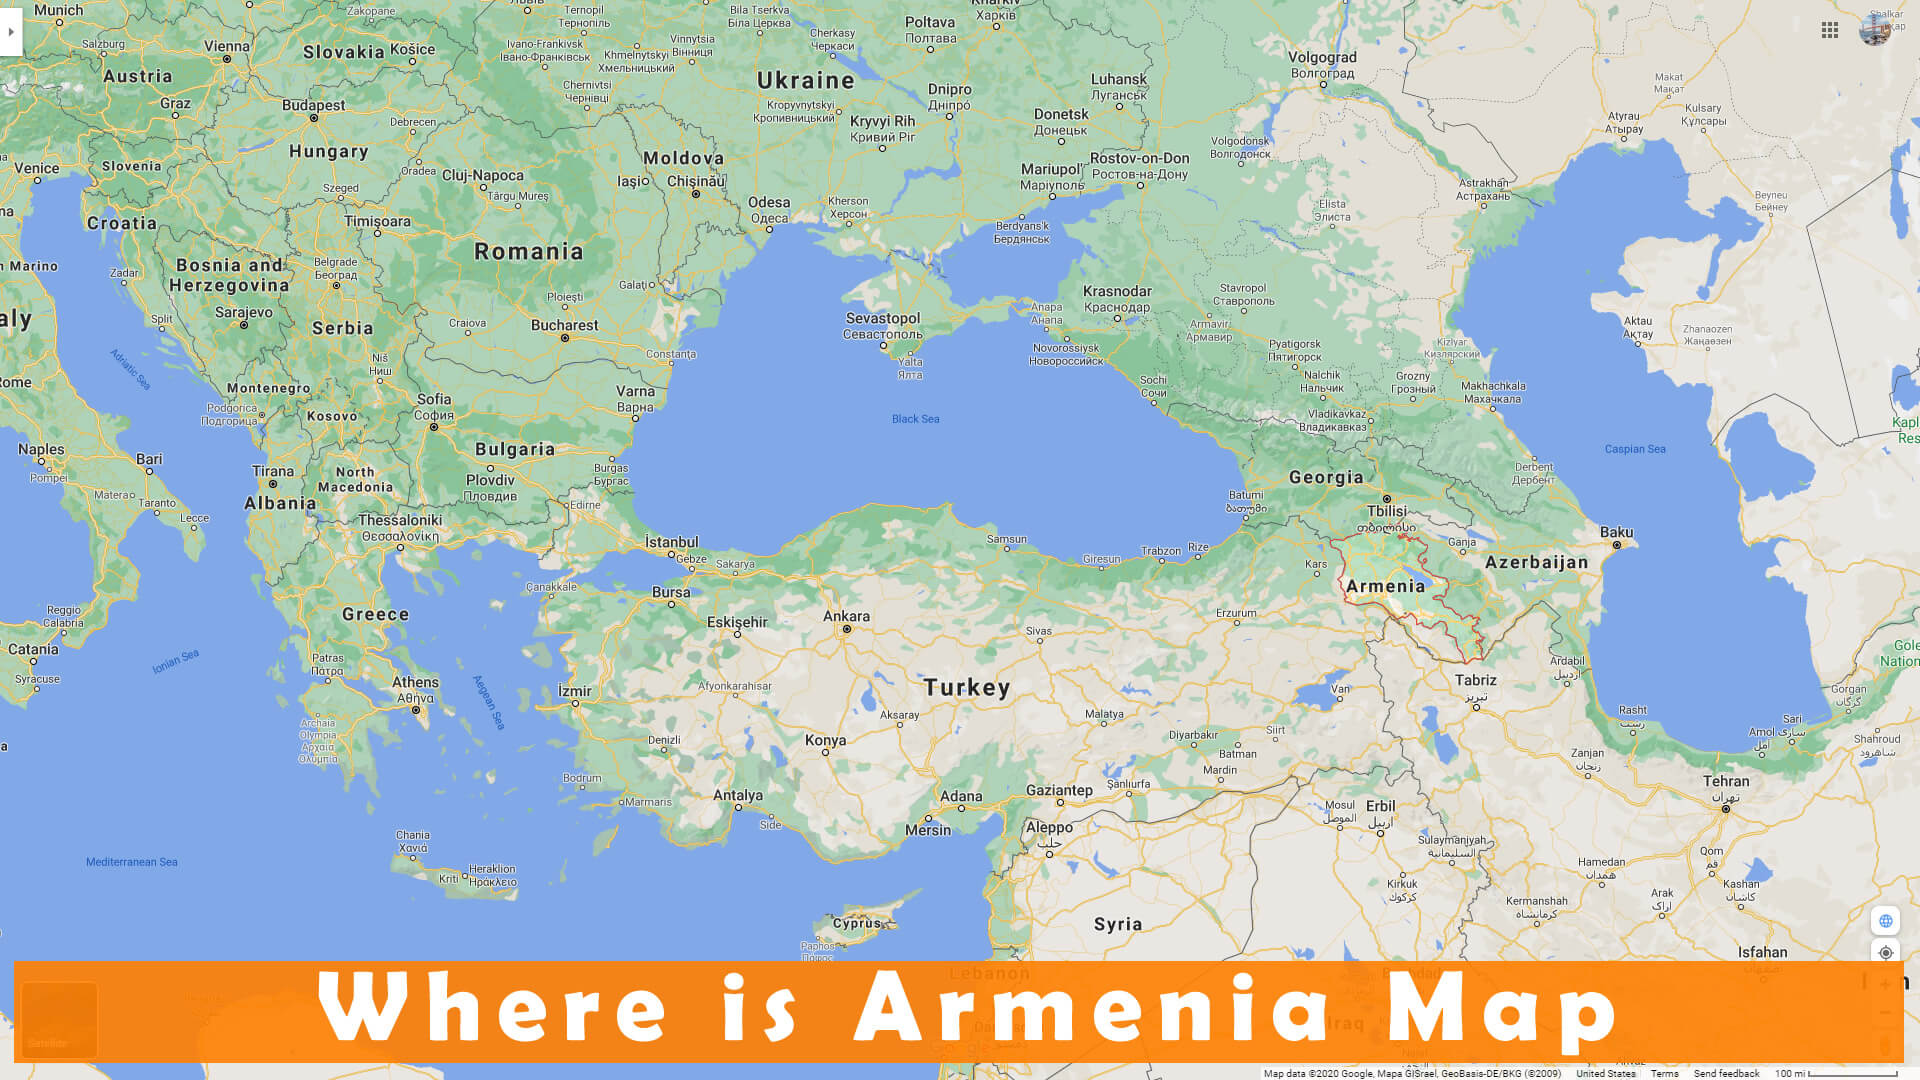 Where is Armenia Map